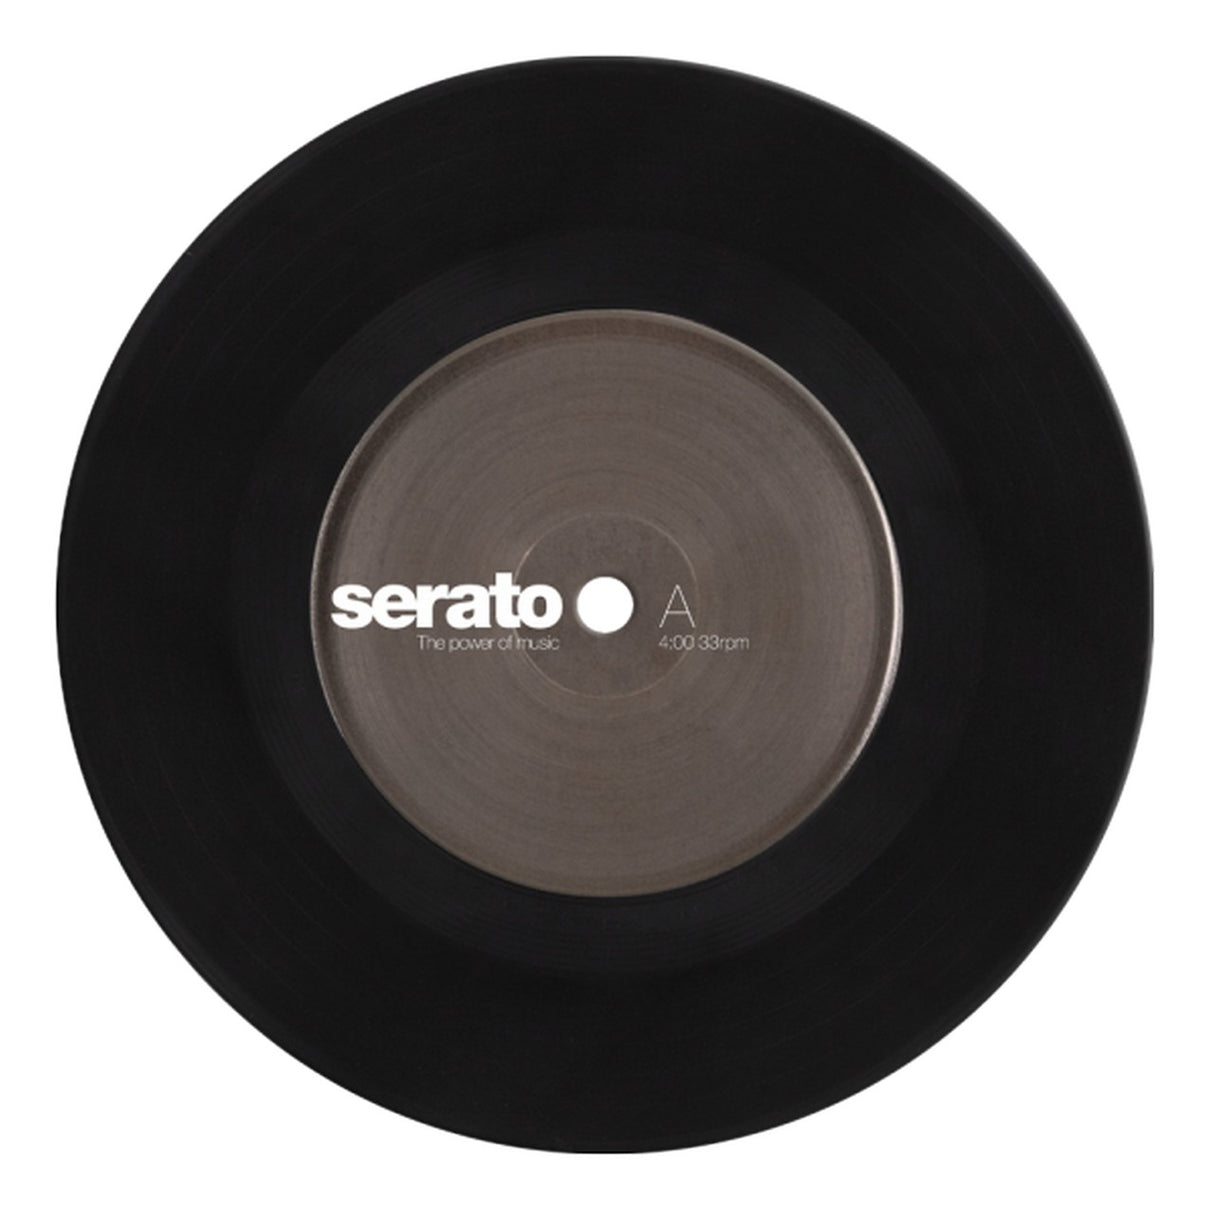 Serato 7-Inch Control Vinyl, Black, Pair